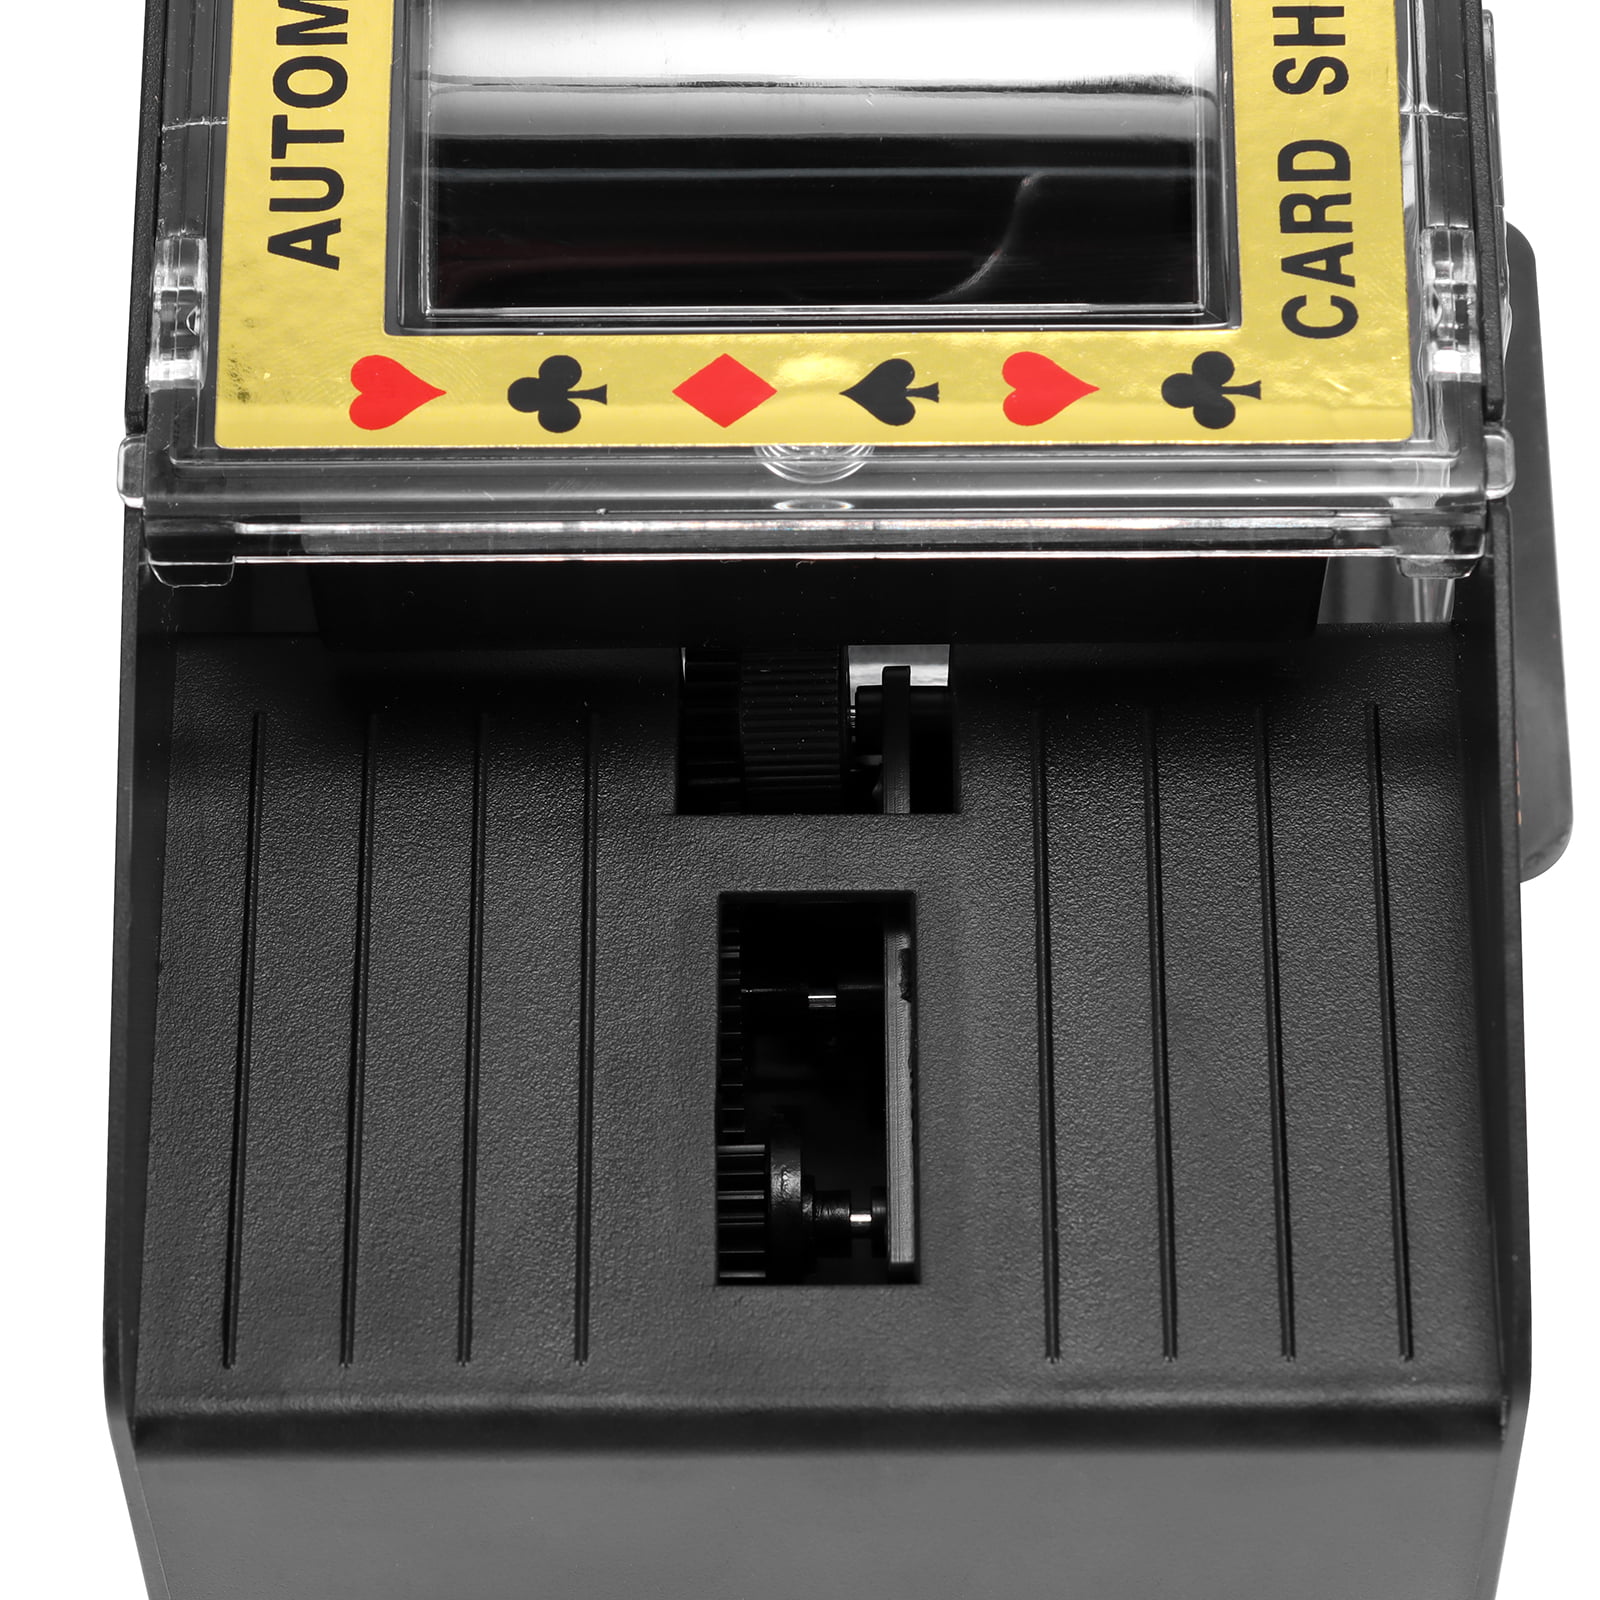 Blackjack Poker JCAsla Automatic Card Shuffler with 2 Pack Standard Poker Playing Cards Card Shuffler & 2 Pack Playing Cards 2 Deck Electric Battery Operated Poker Shuffling Machine for Home Card Games 